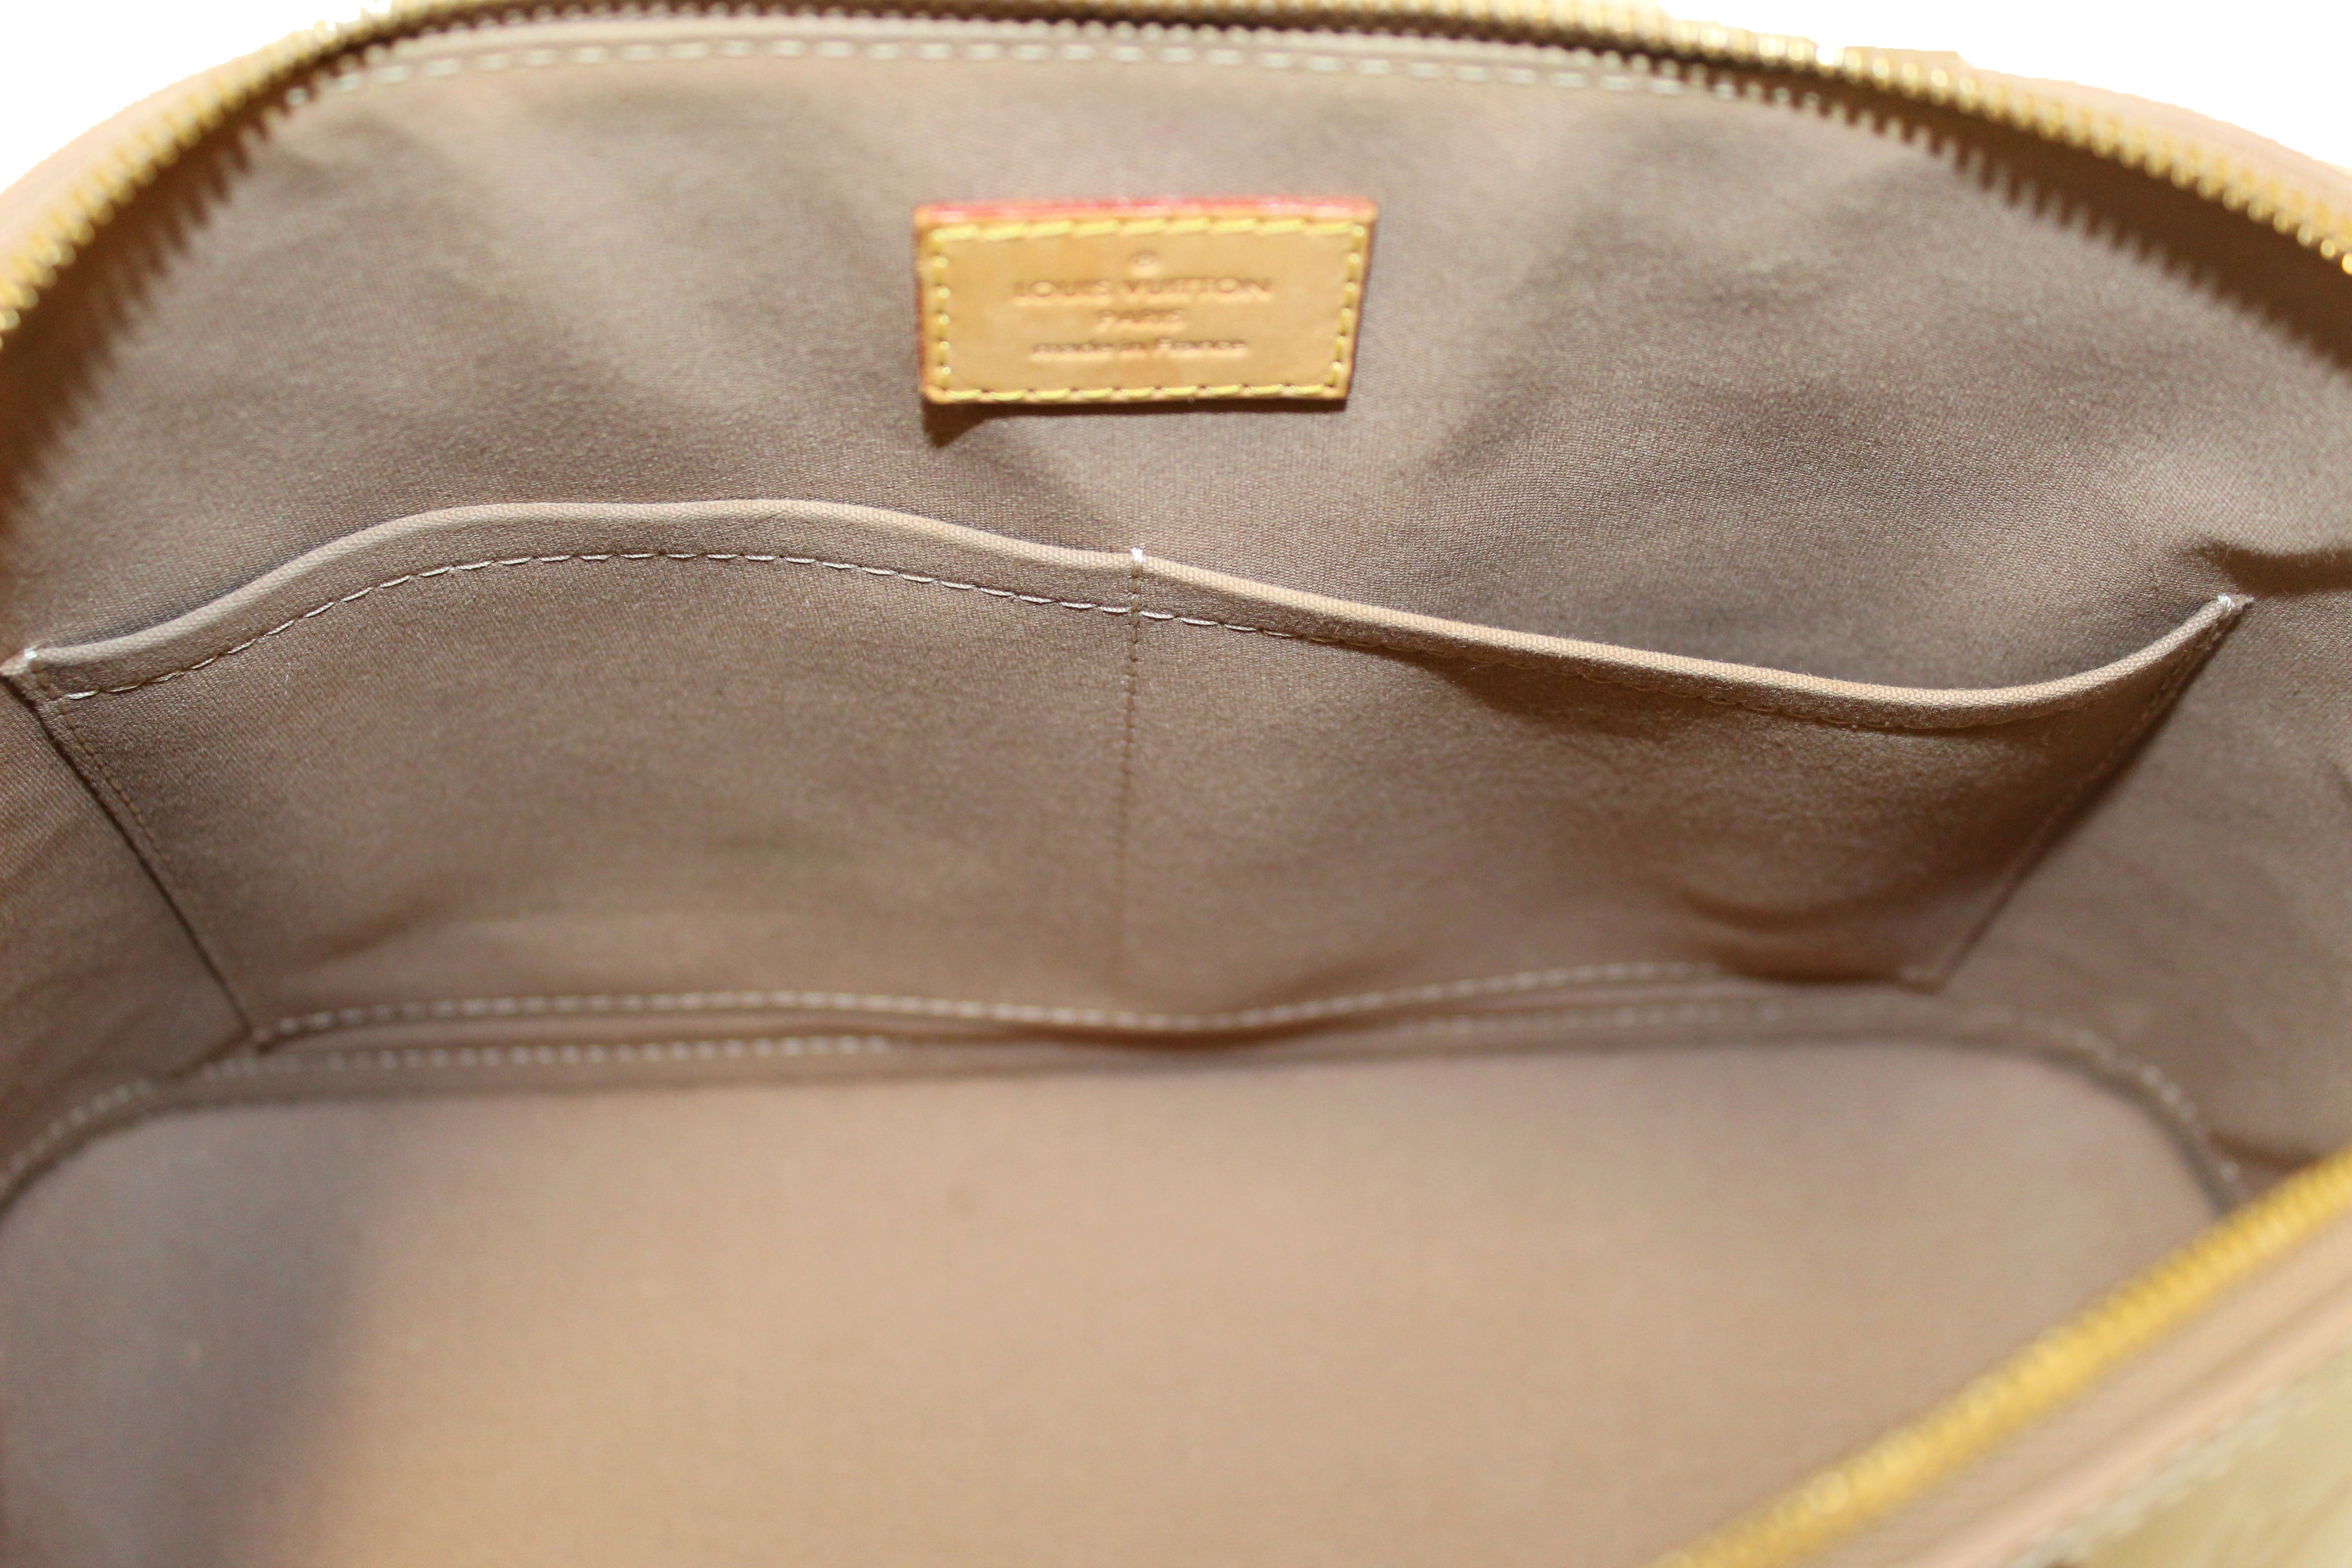 Louis Vuitton Beige Bags & Handbags for Women